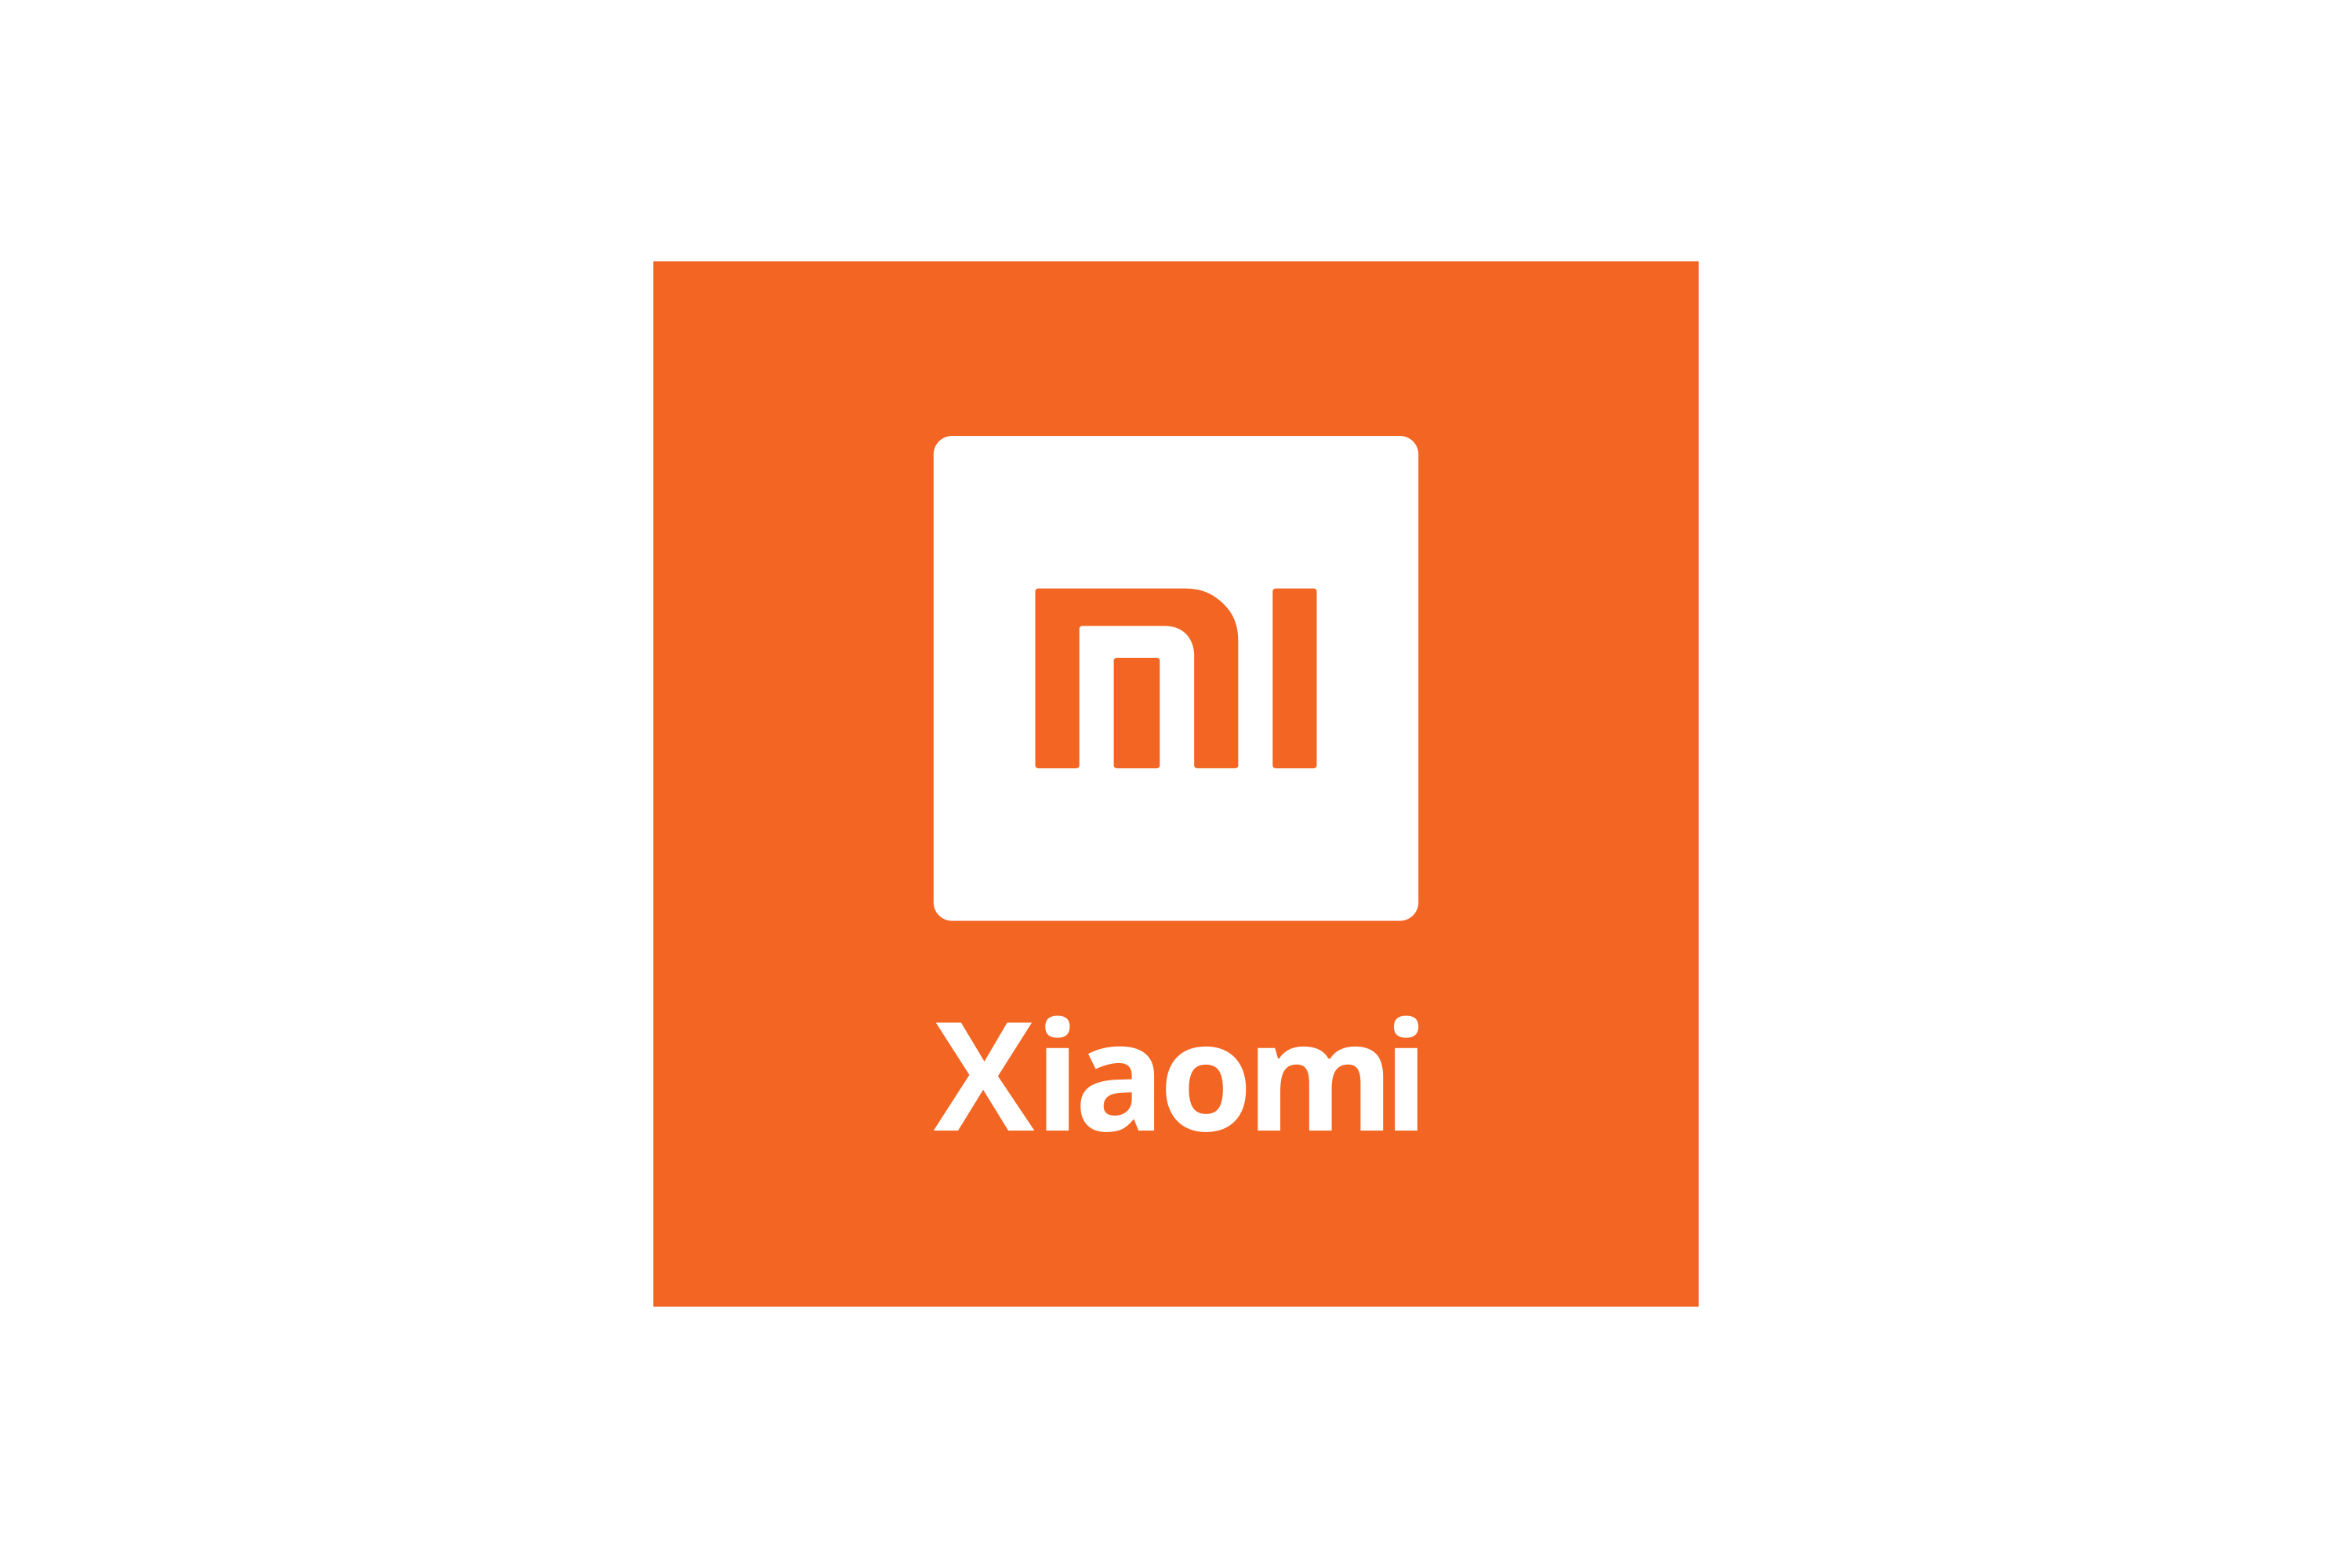 Логотип Сяоми. Эмблема ксиоми фирма Xiaomi. Новый логотип Xiaomi. Логотип Xiaomi на белом фоне.